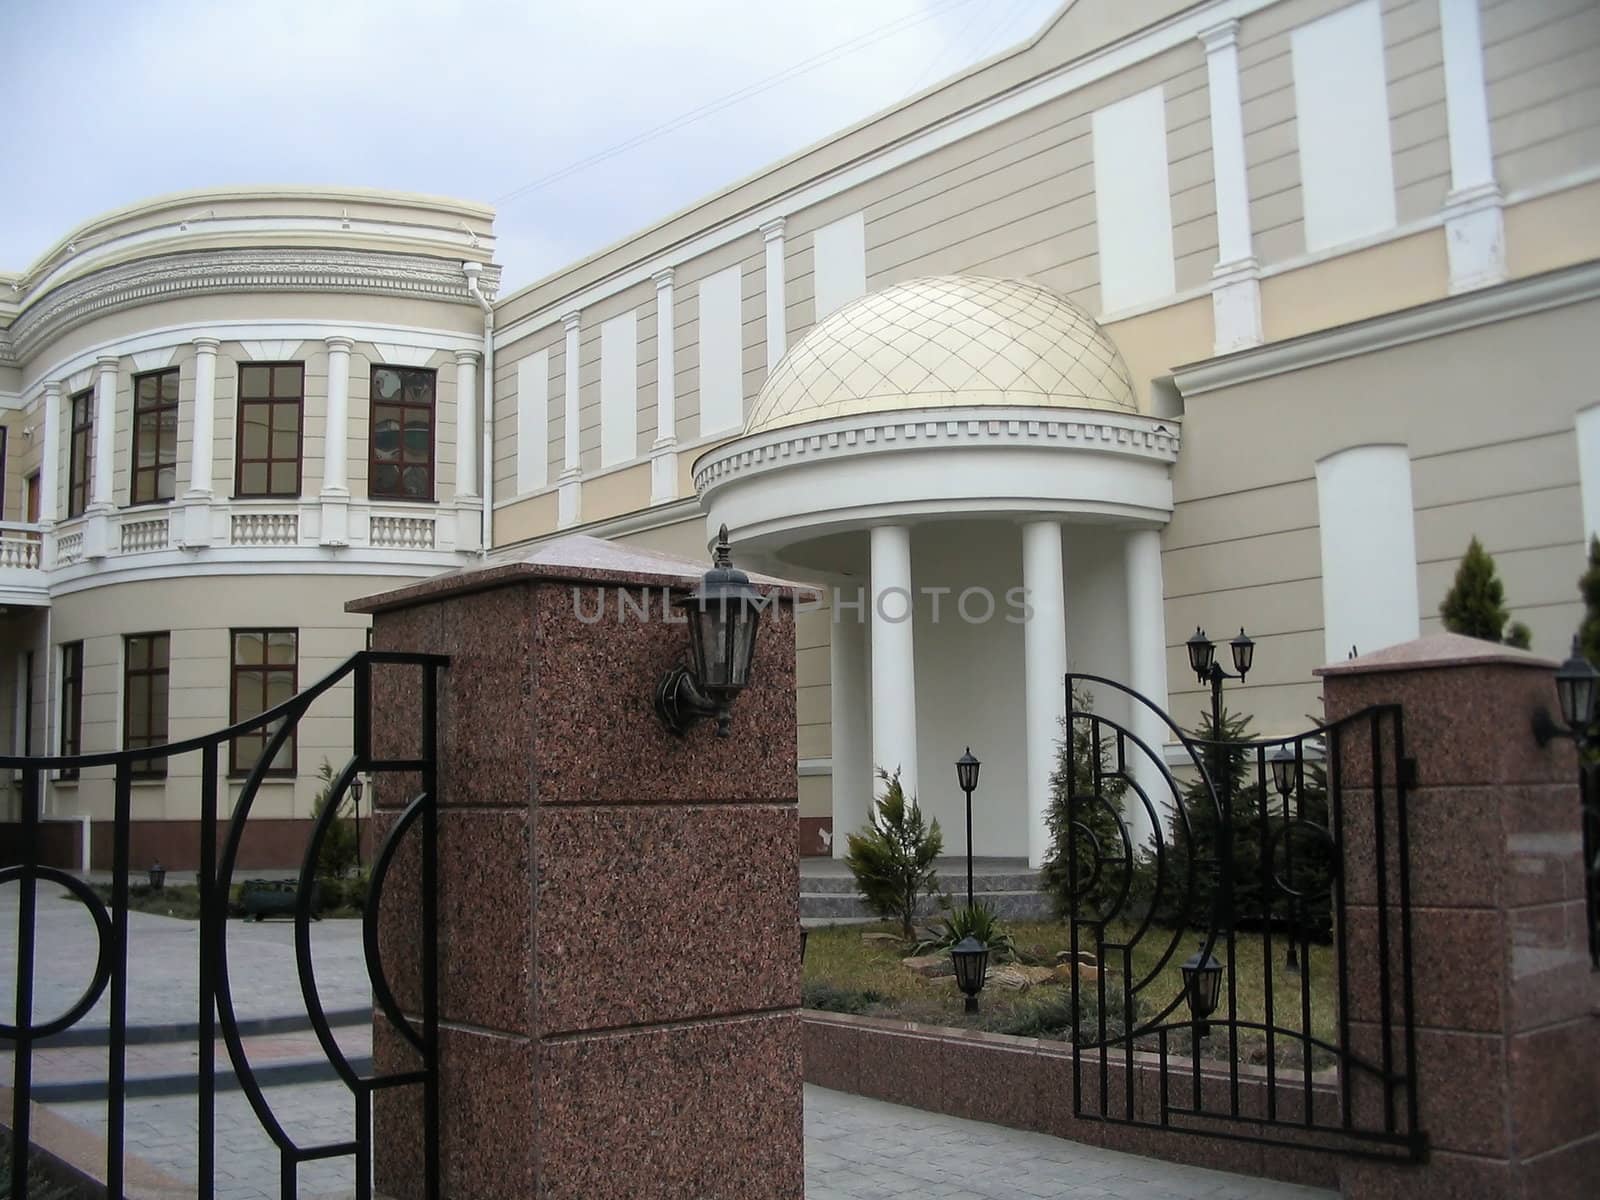 History building on Rostov city